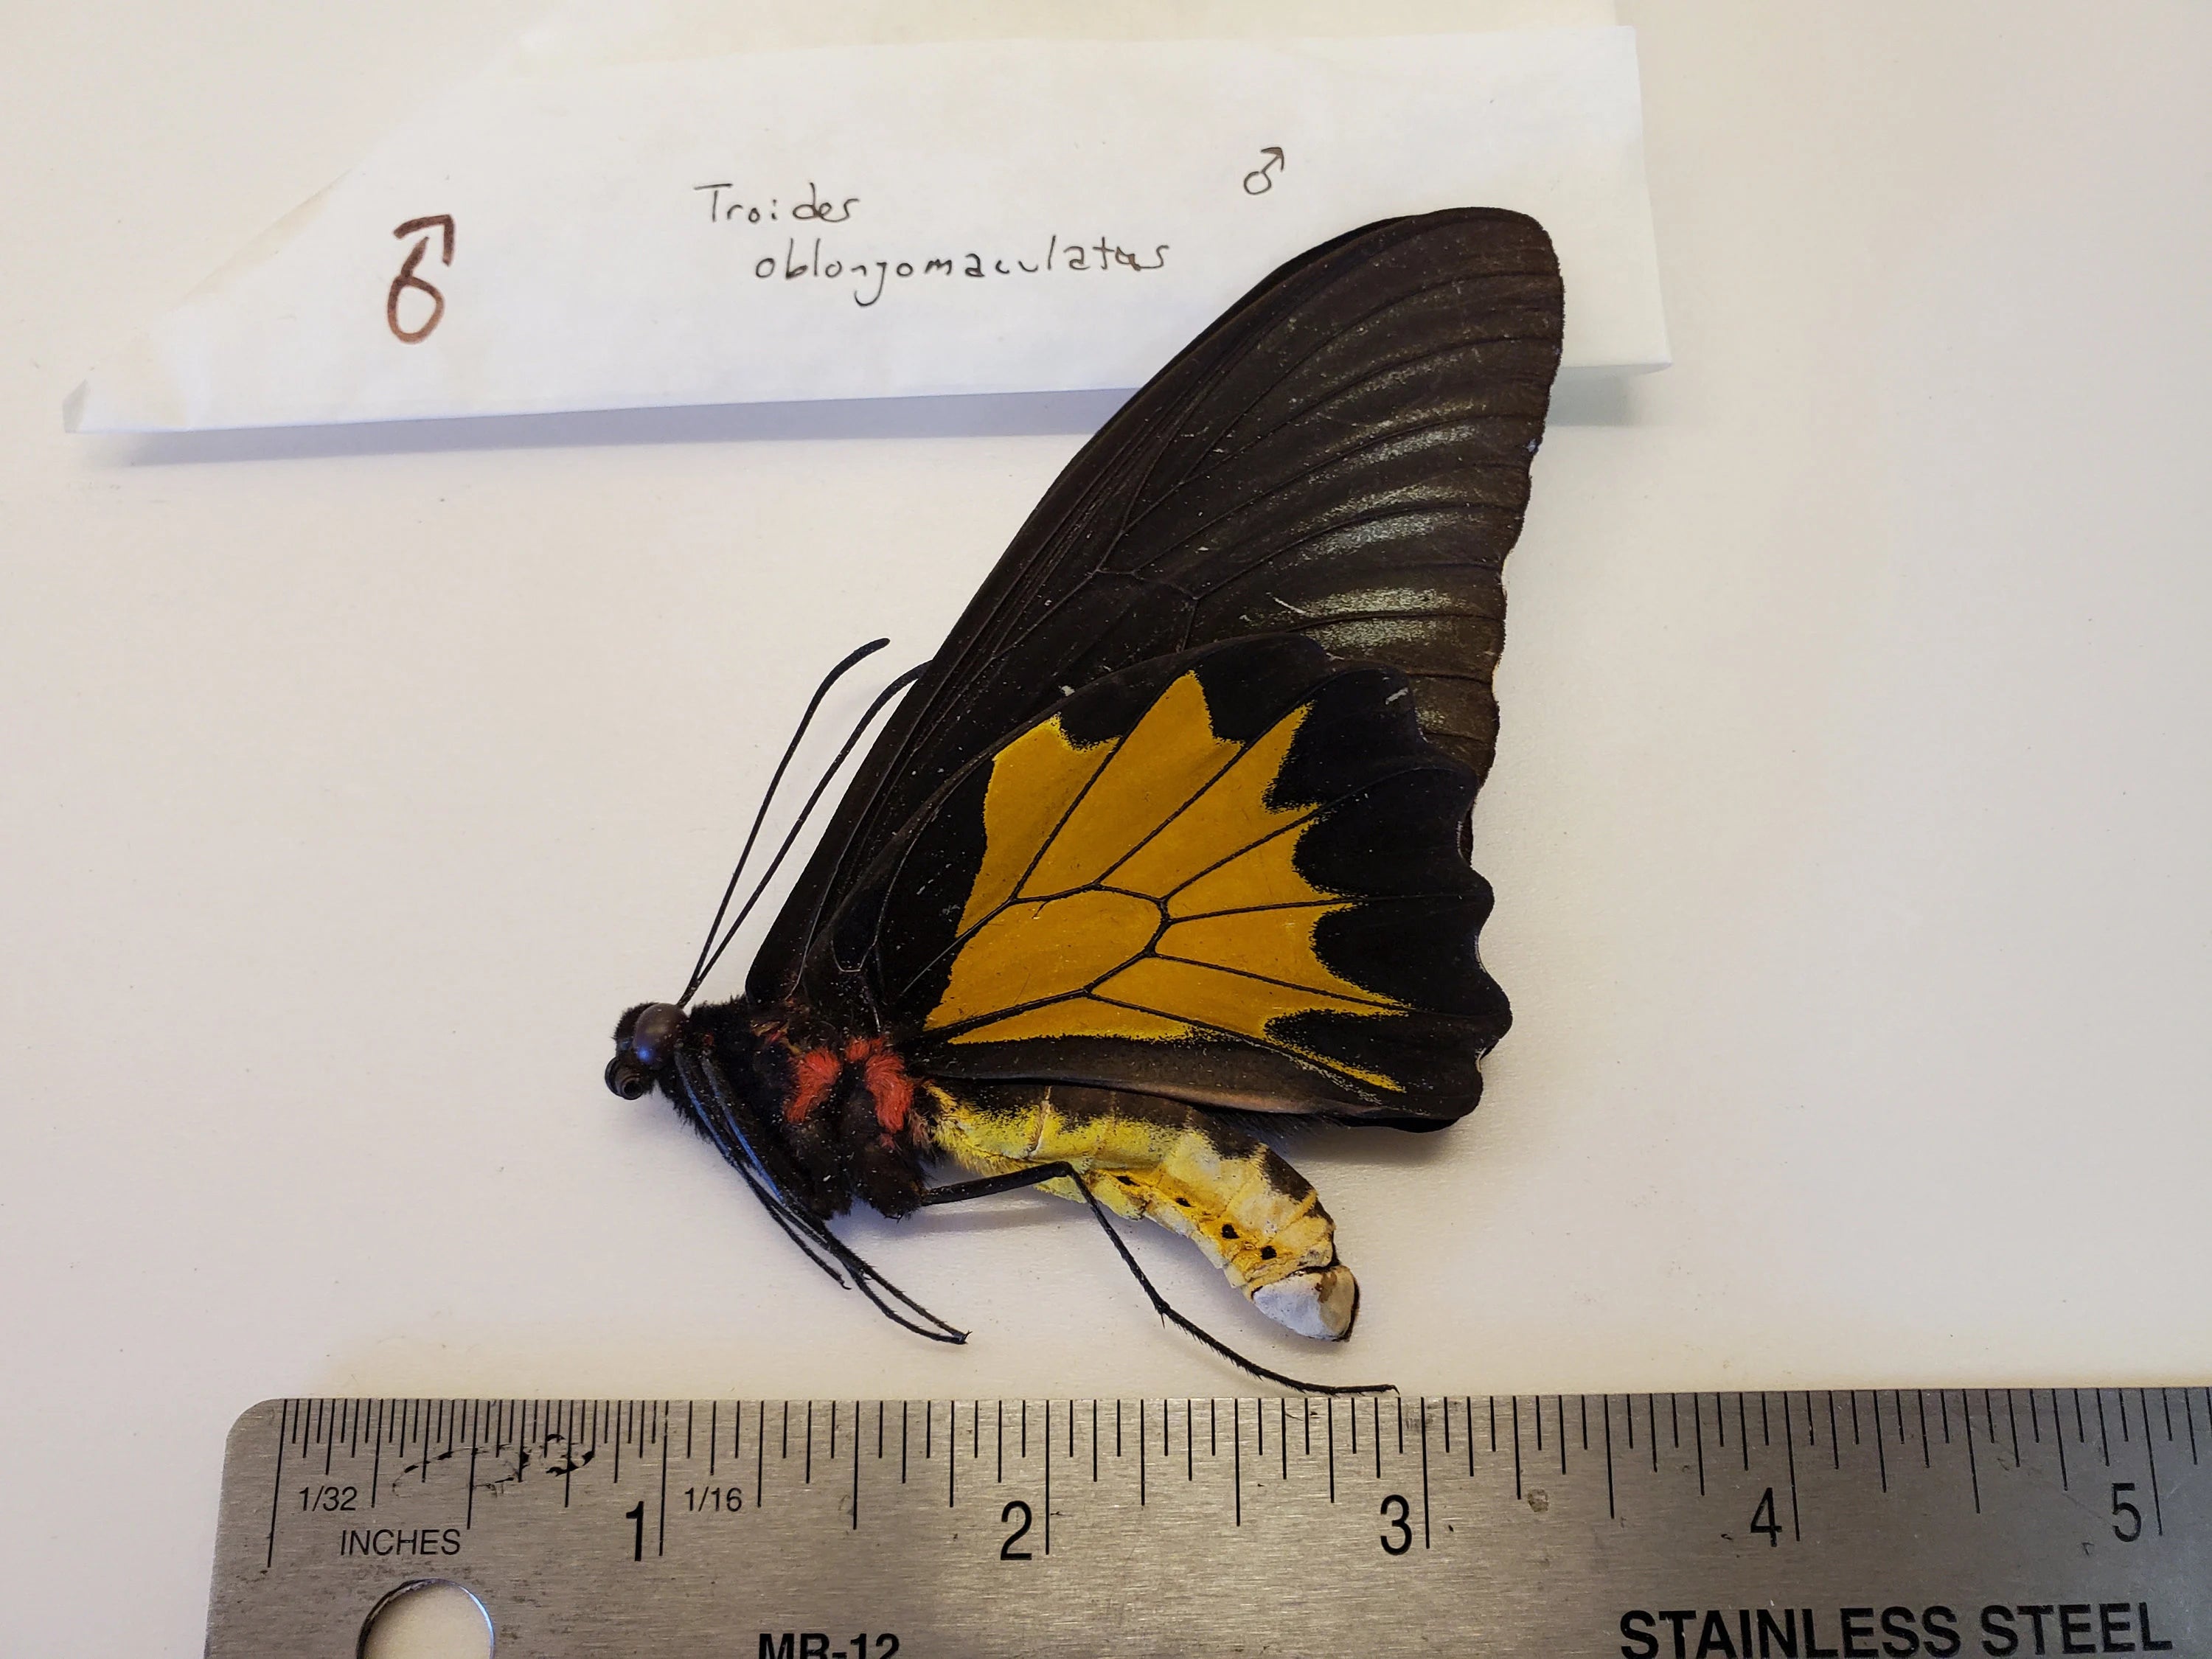 Birdwing Butterfly 'Troides oblongomaculatus' Male